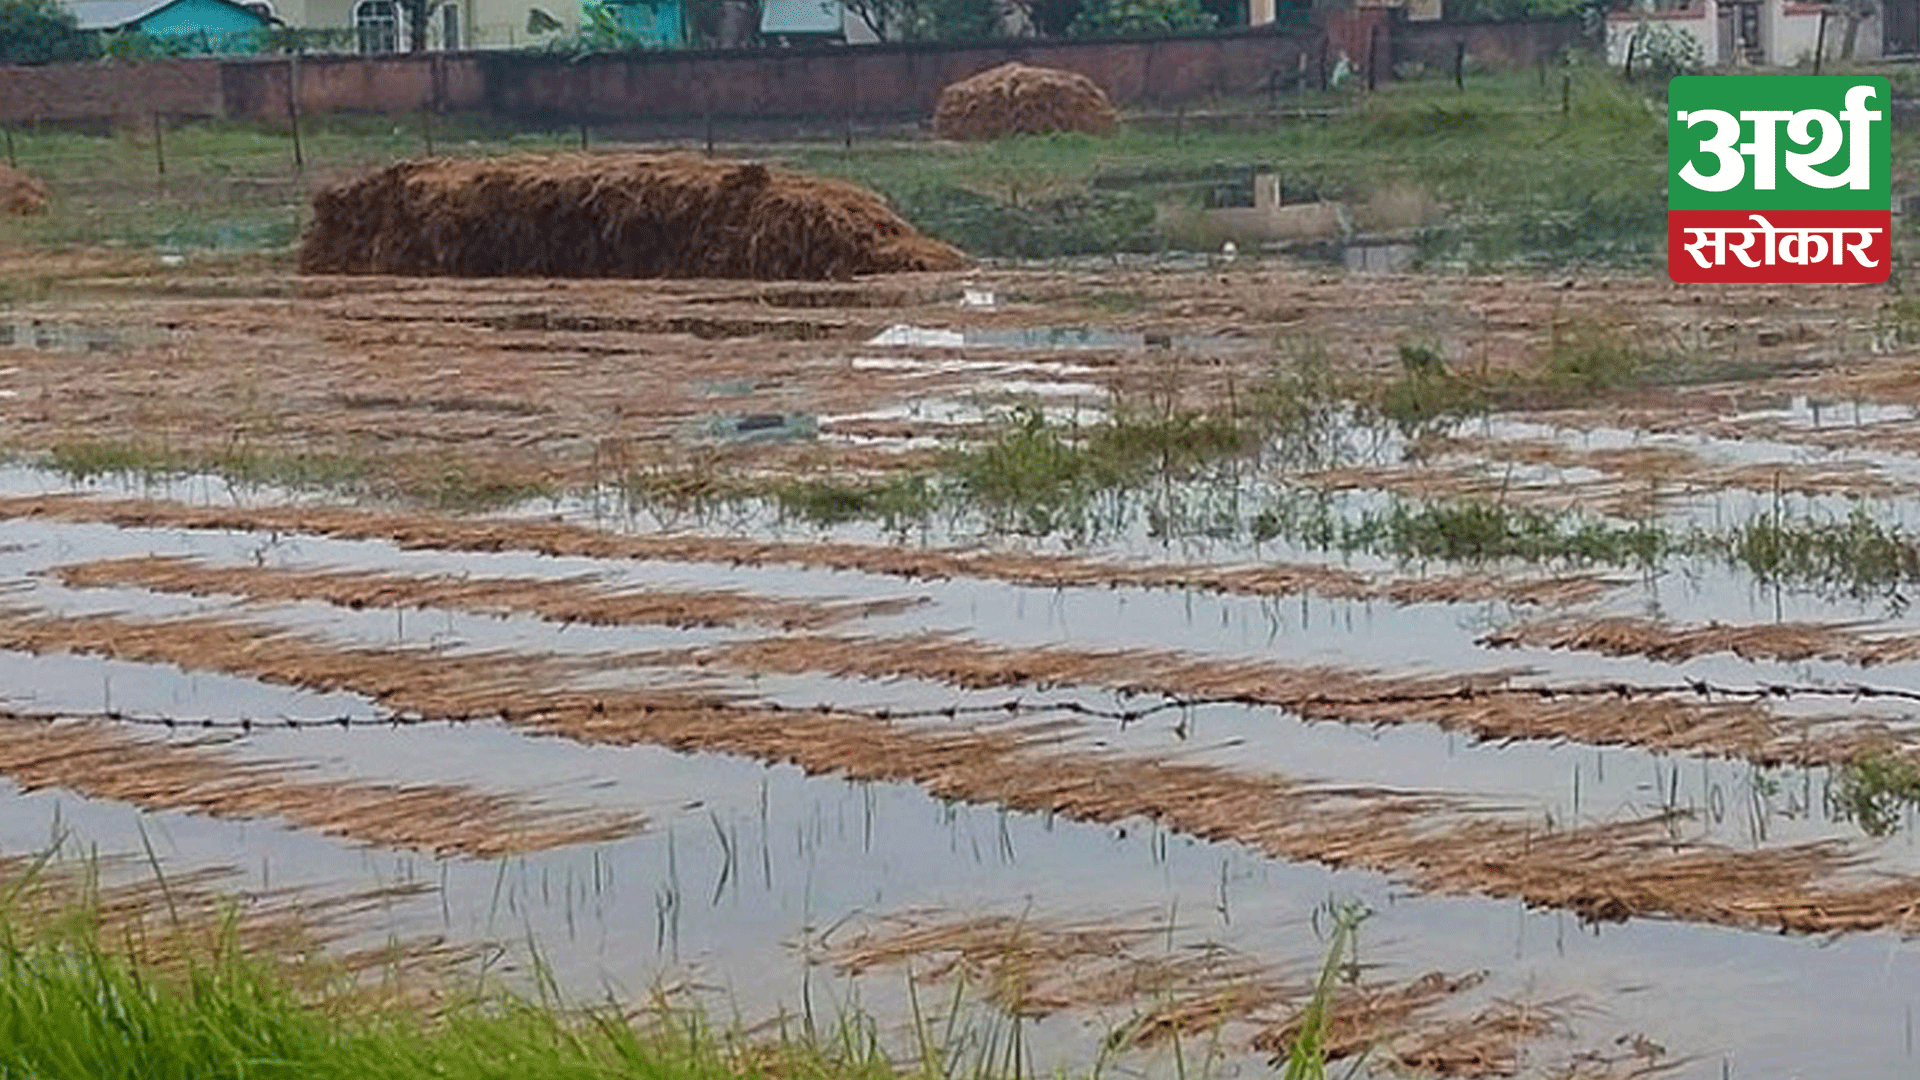 Unseasonal rain damages over 3,000 metric tonnes of paddy crop in Gandaki